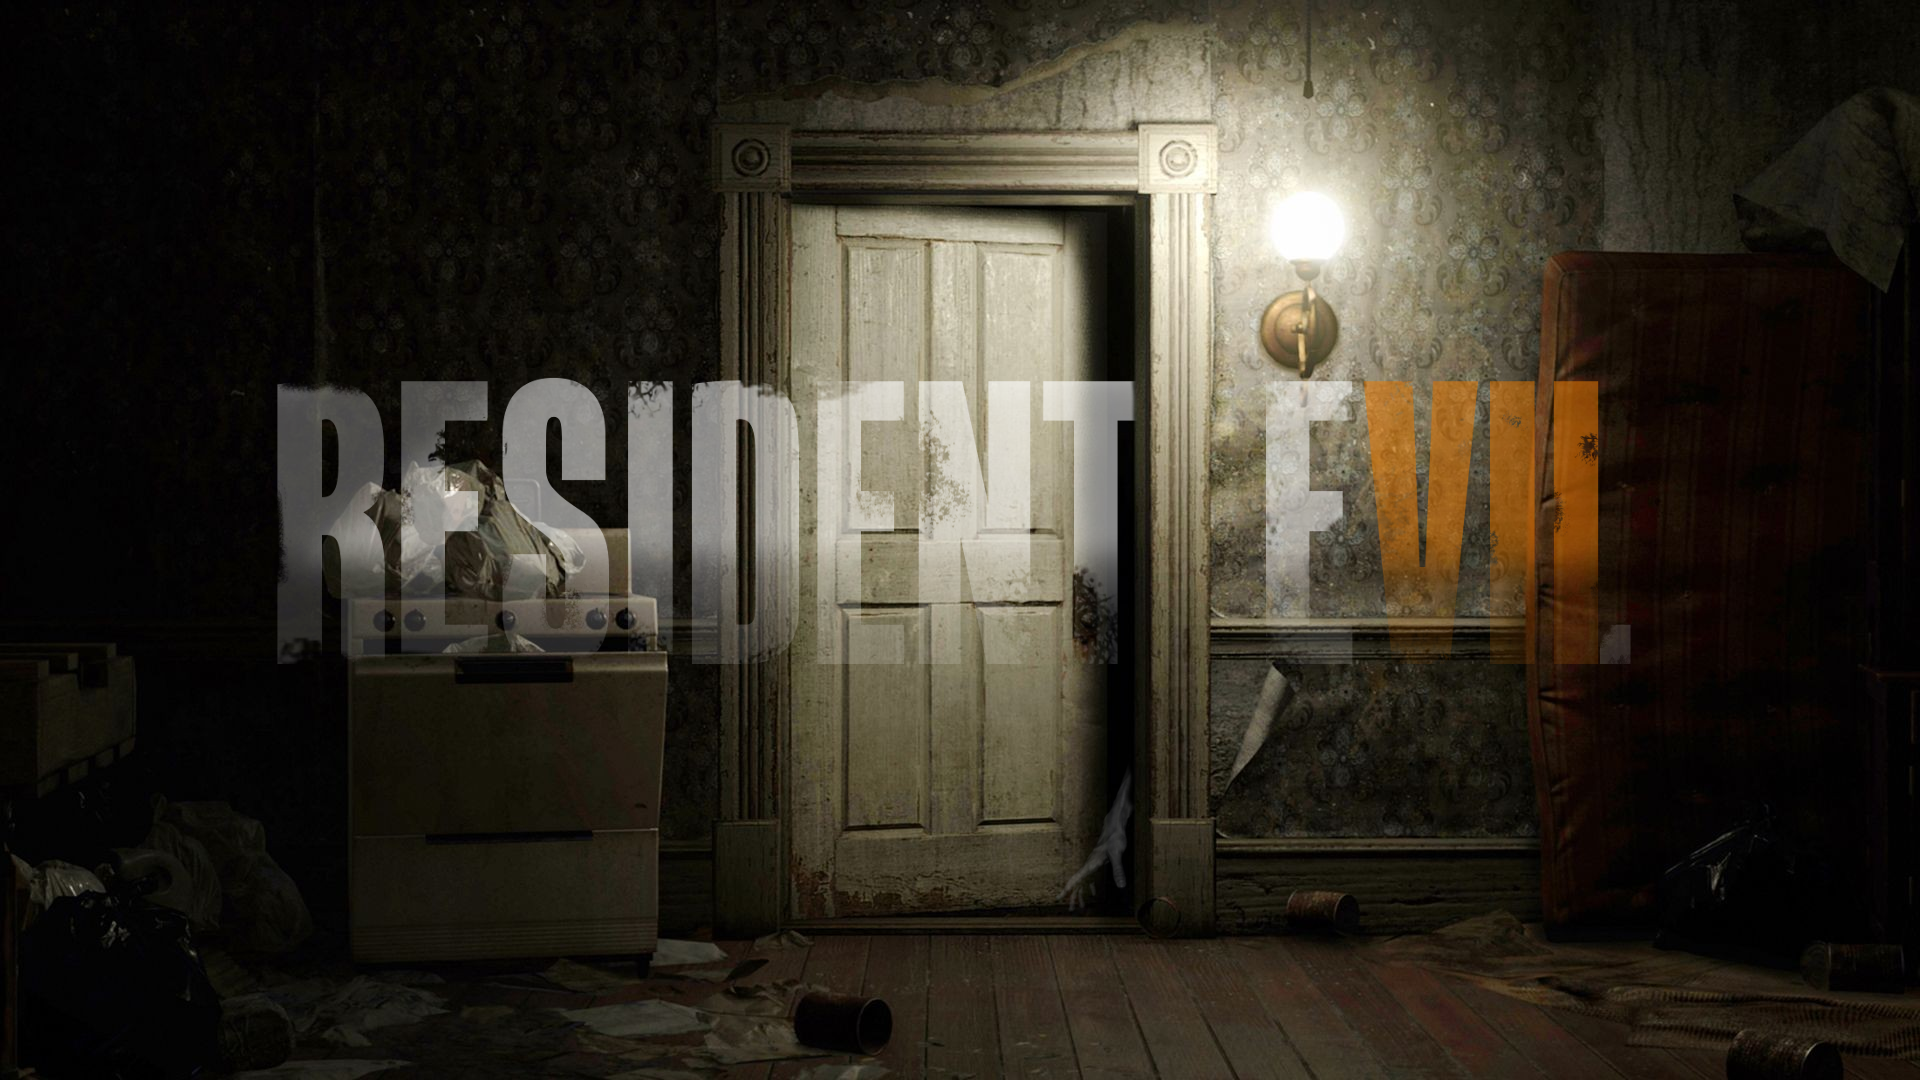 Resident Evil 7 Biohazard Gold Edition Cuenta Compartida Xbox One Xbox Series